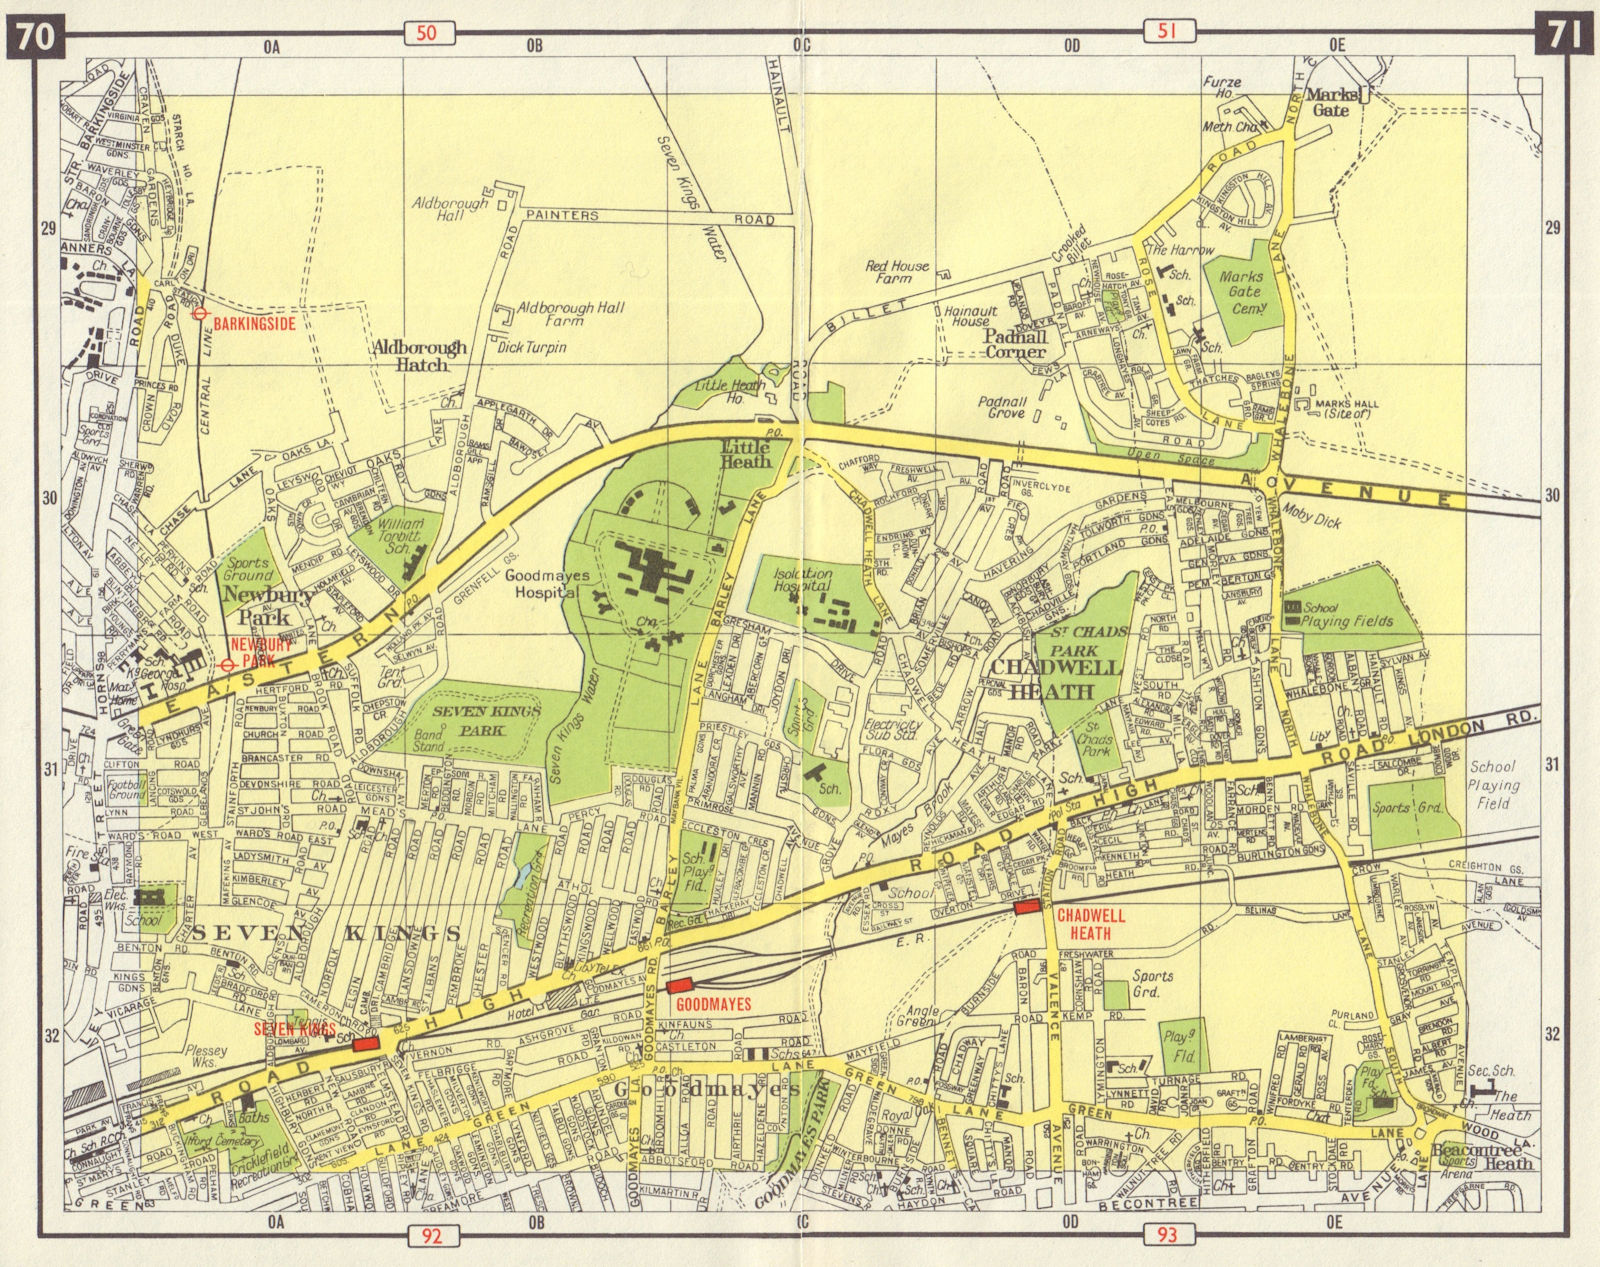 NE LONDON Chadwell Heath Goodmayes Seven Kings Barkingside Newbury Pk 1965 map